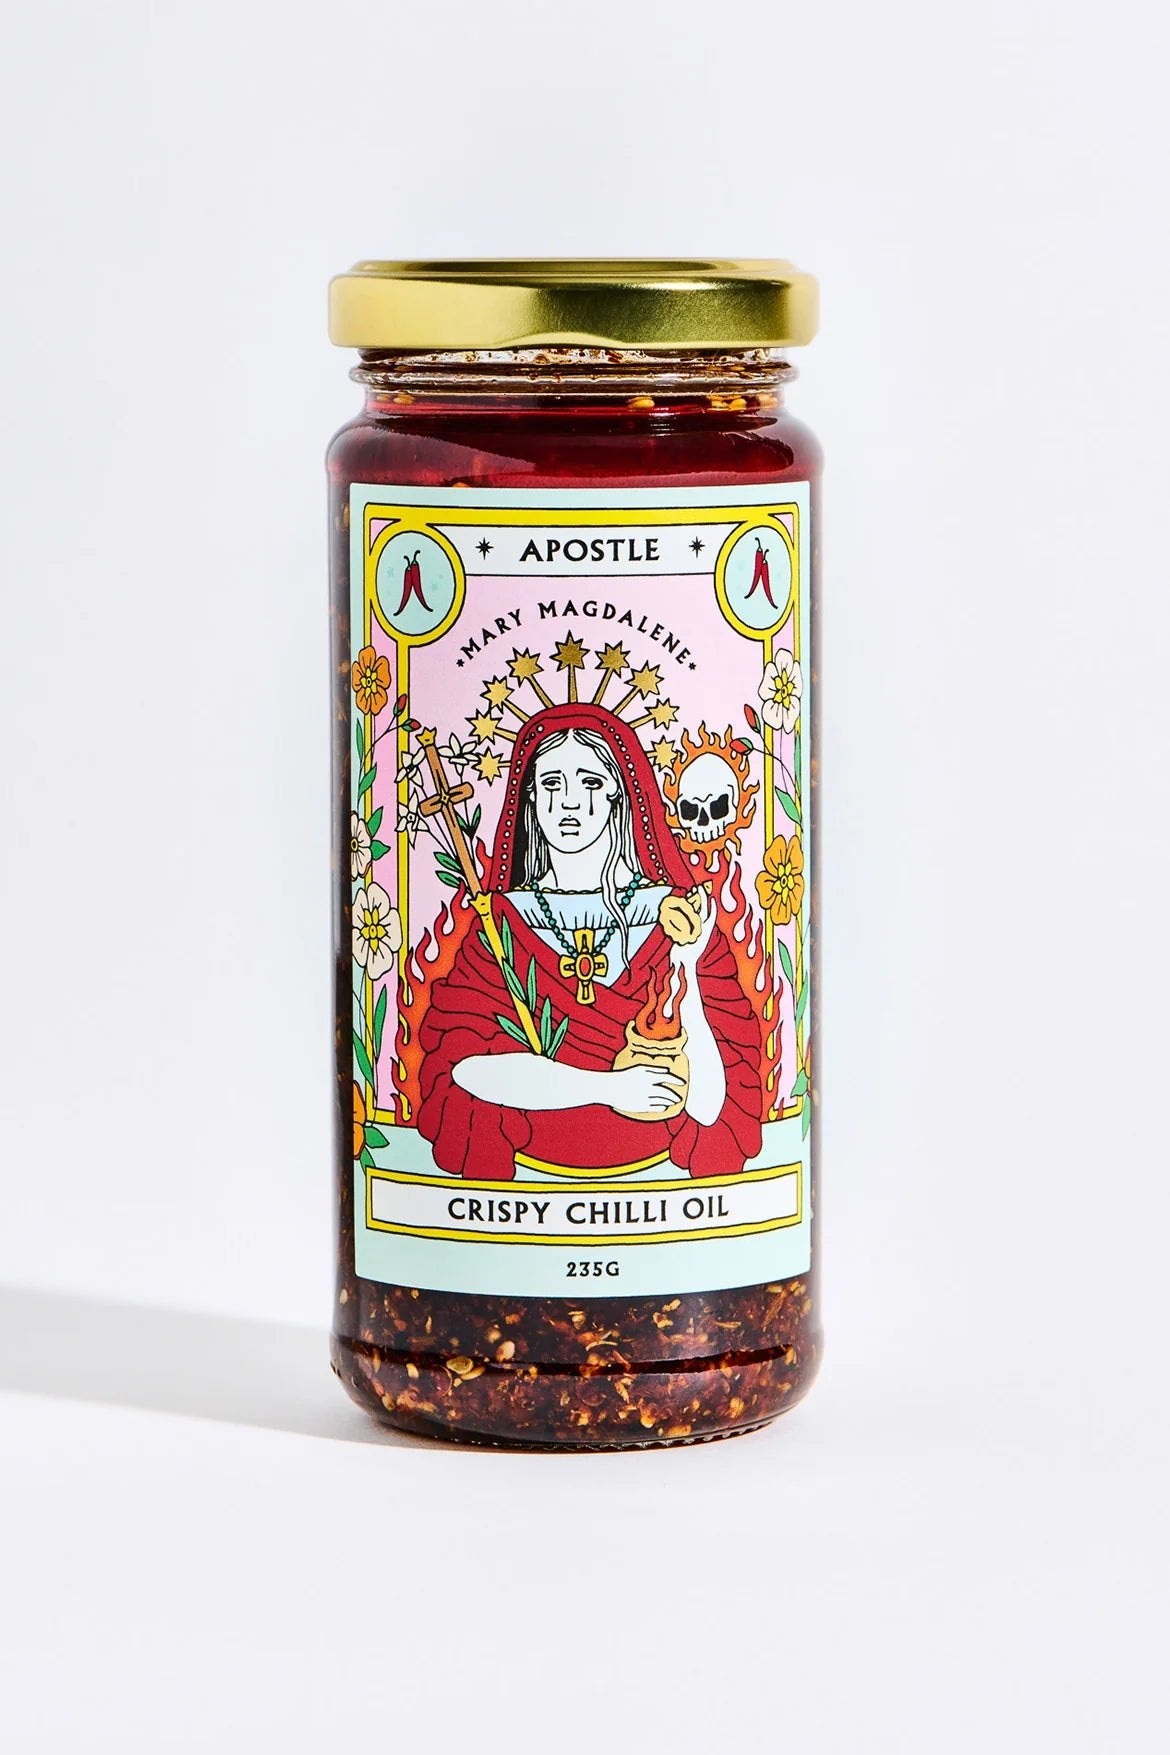 APOSTLE HOT SAUCE Mary Magdalene Crispy Chilli Oil - Preston Apothecary